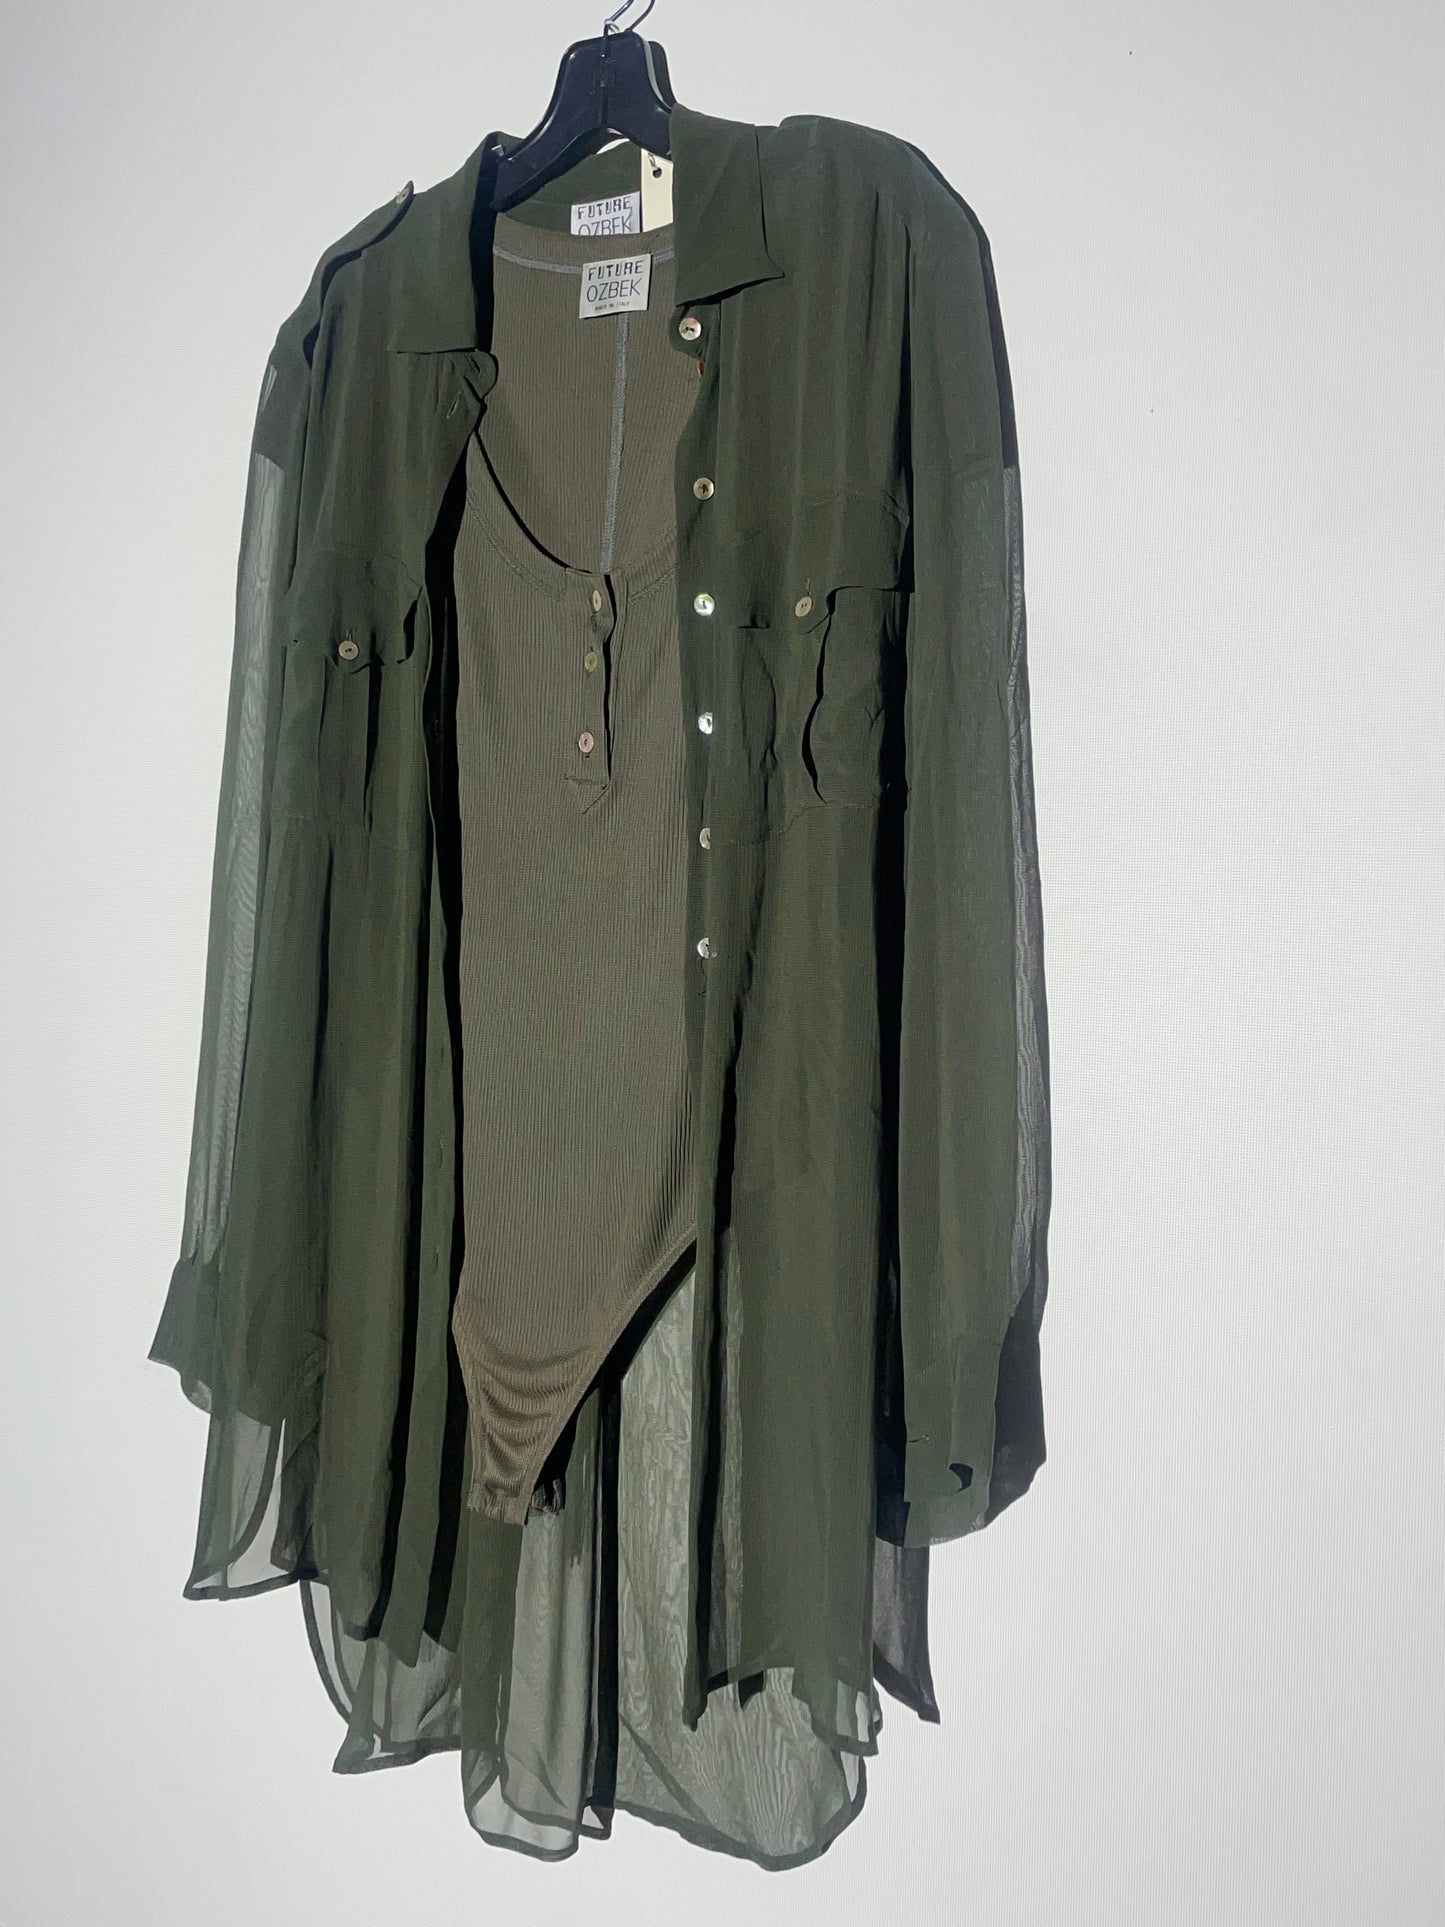 Ozbek 90's rayon khaki bodysuit and transparent laced up shirt